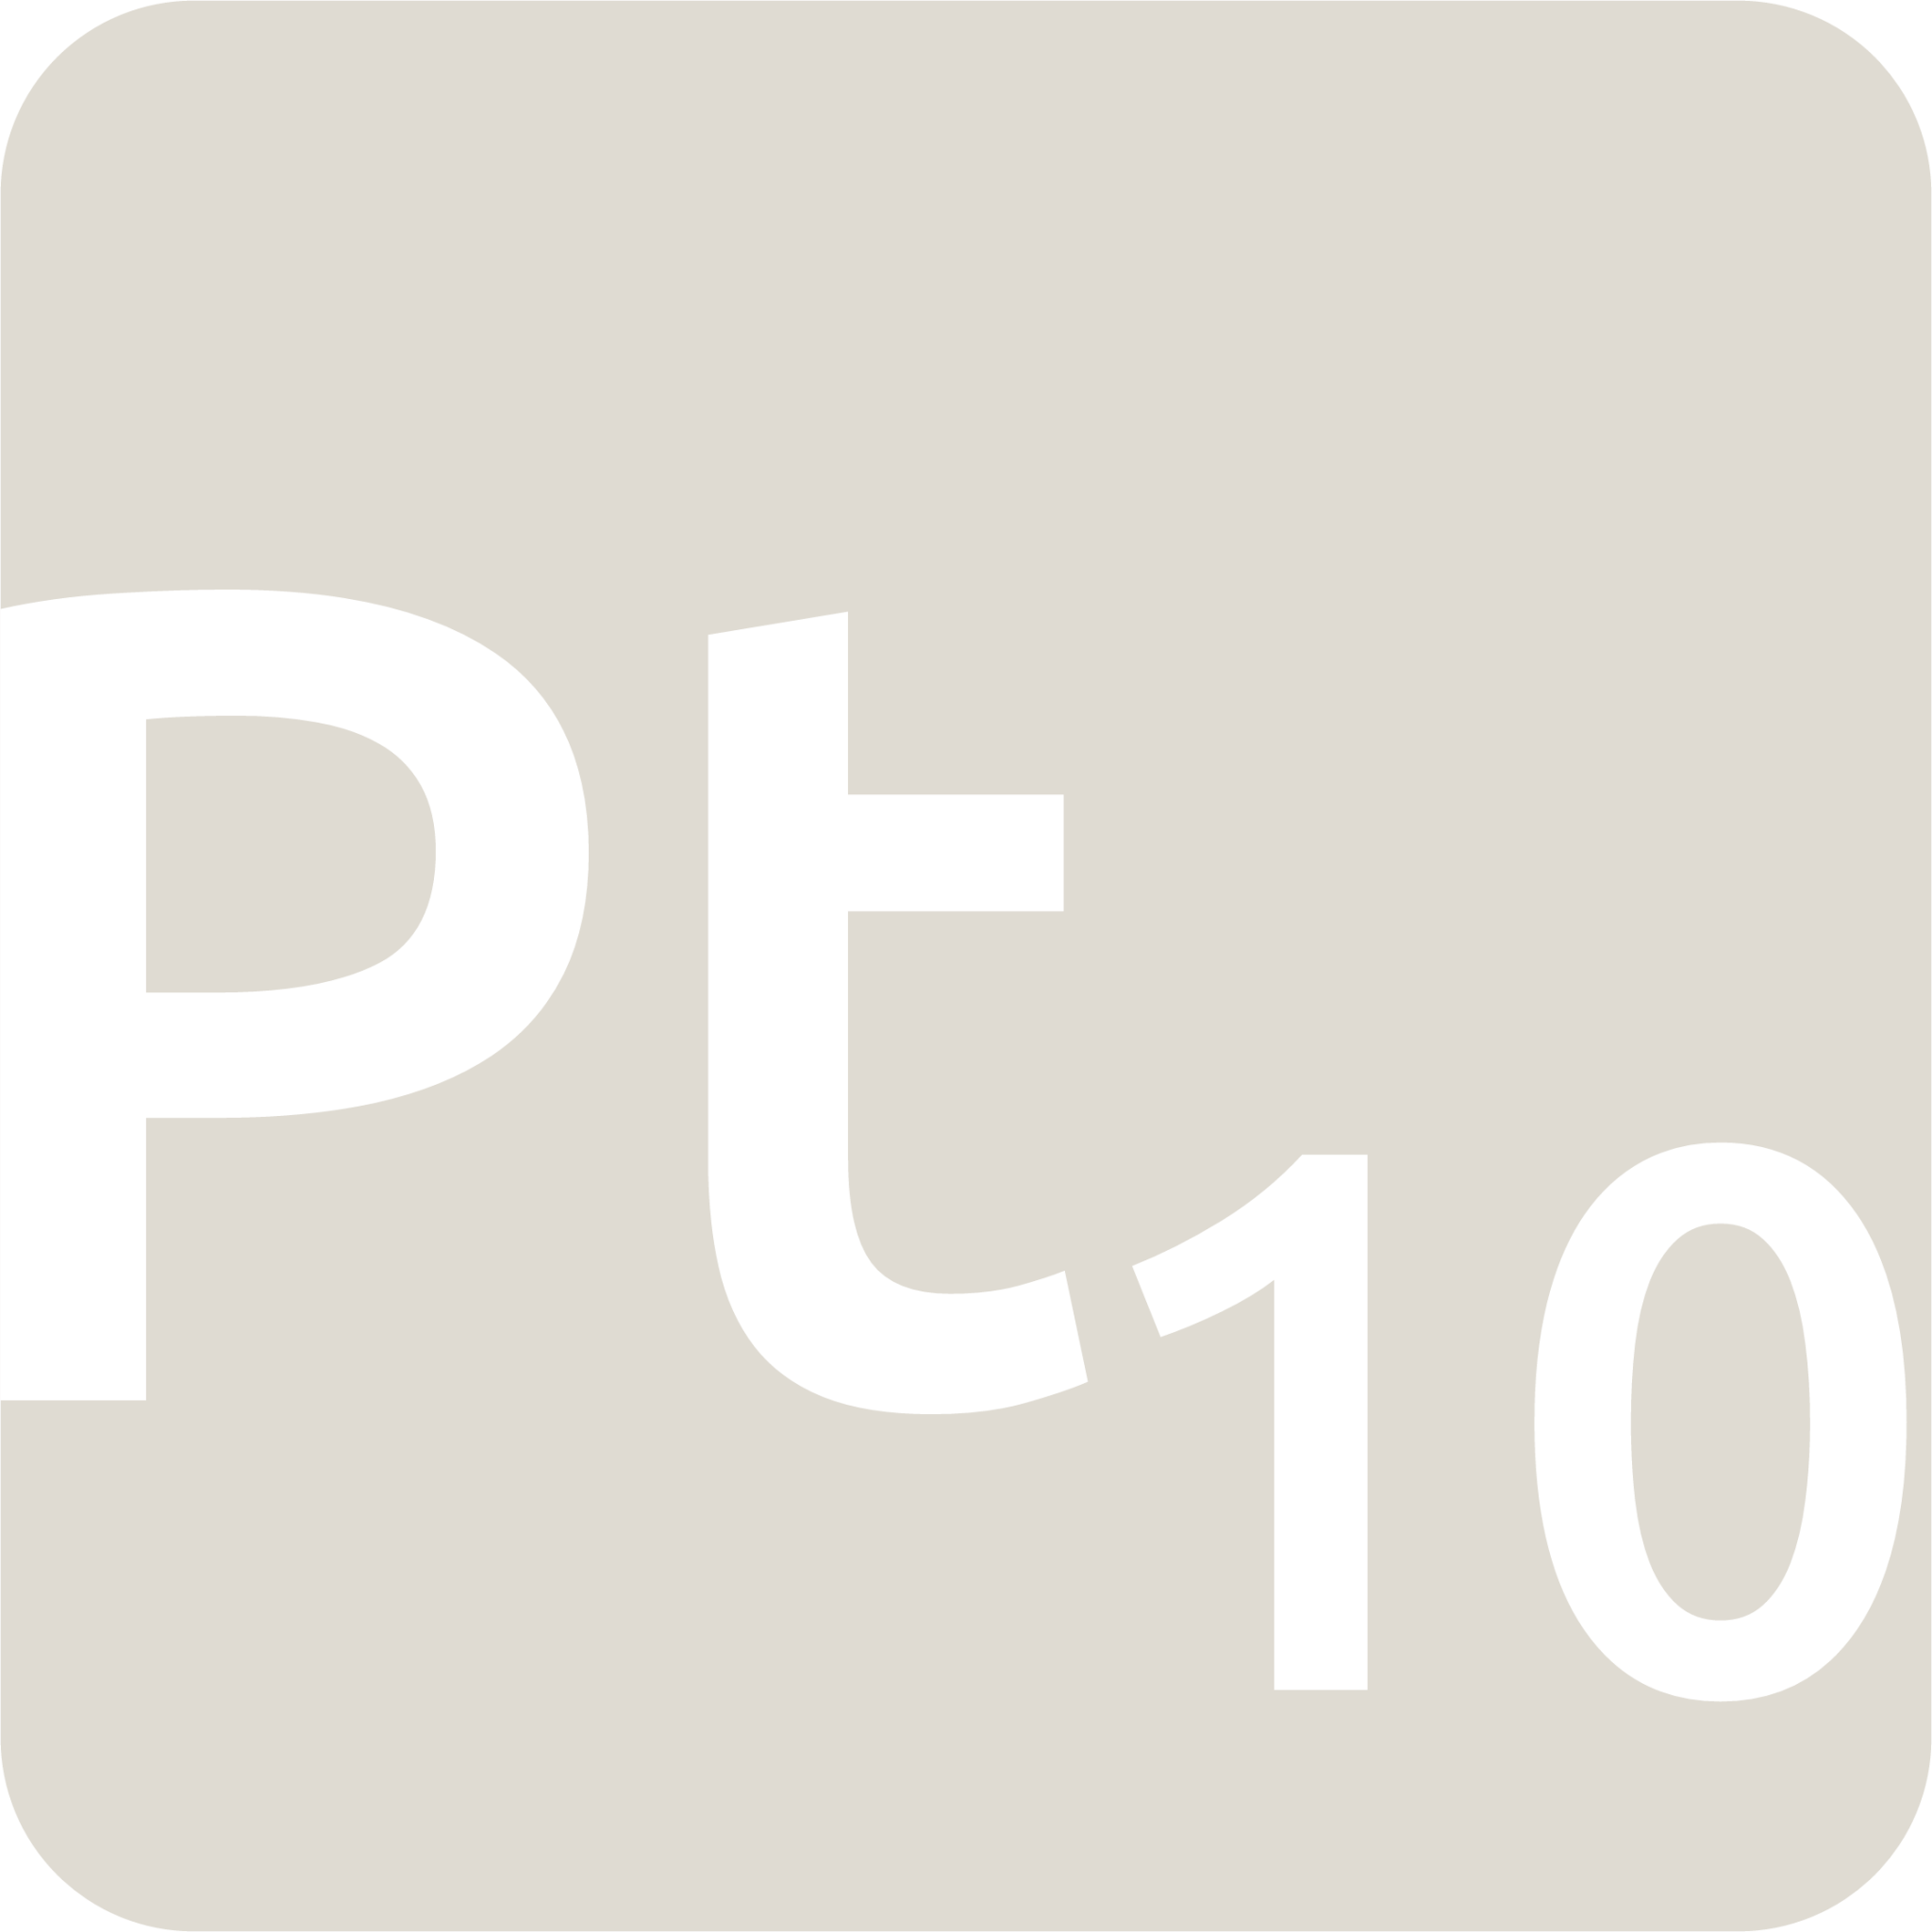 indicator keyboard Pt 10 icon